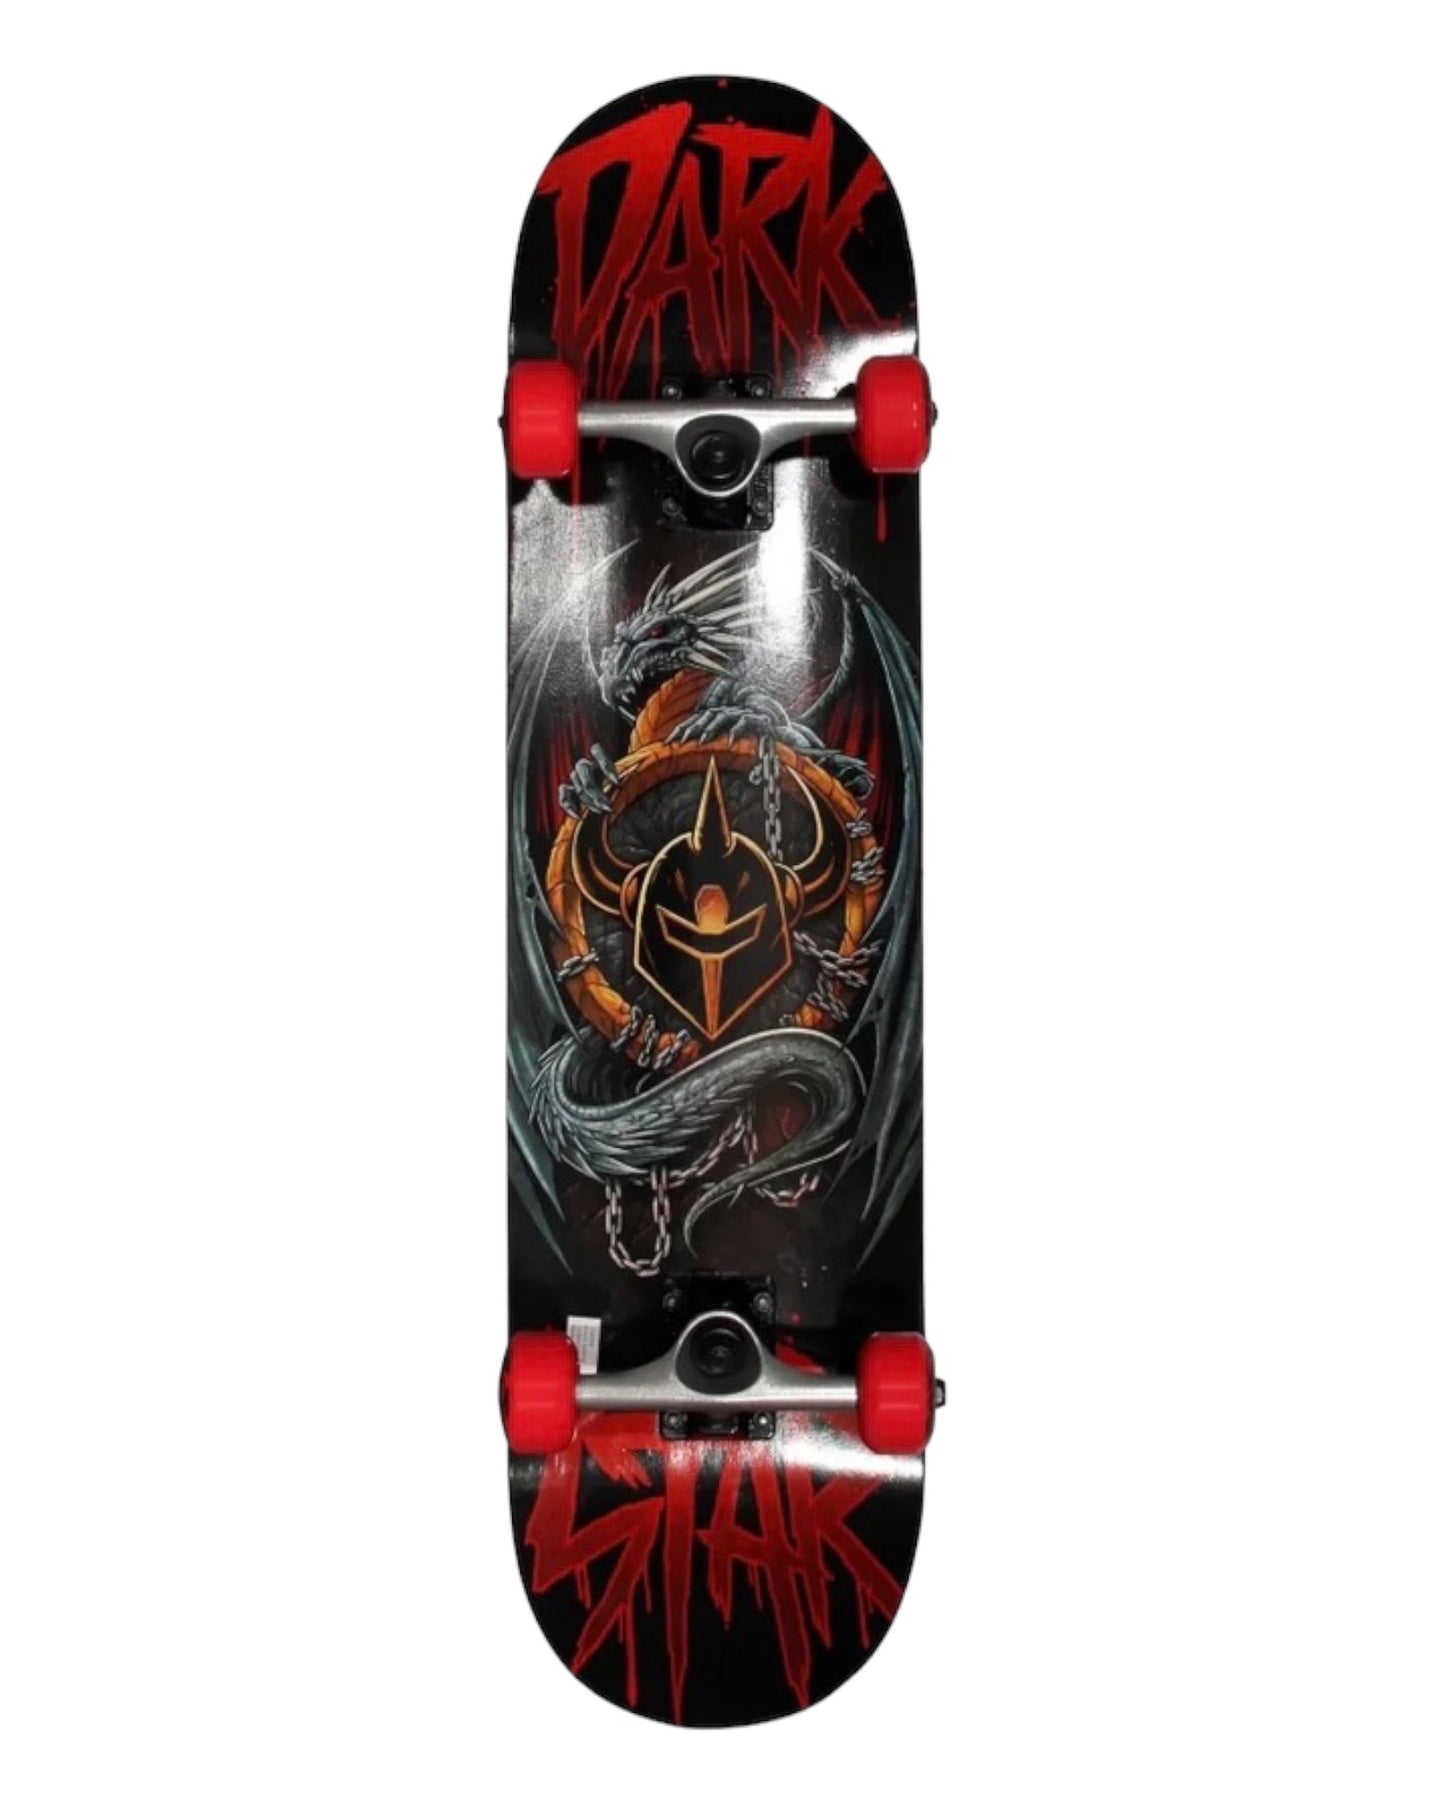 Pro Dark star Skateboard 7.5”